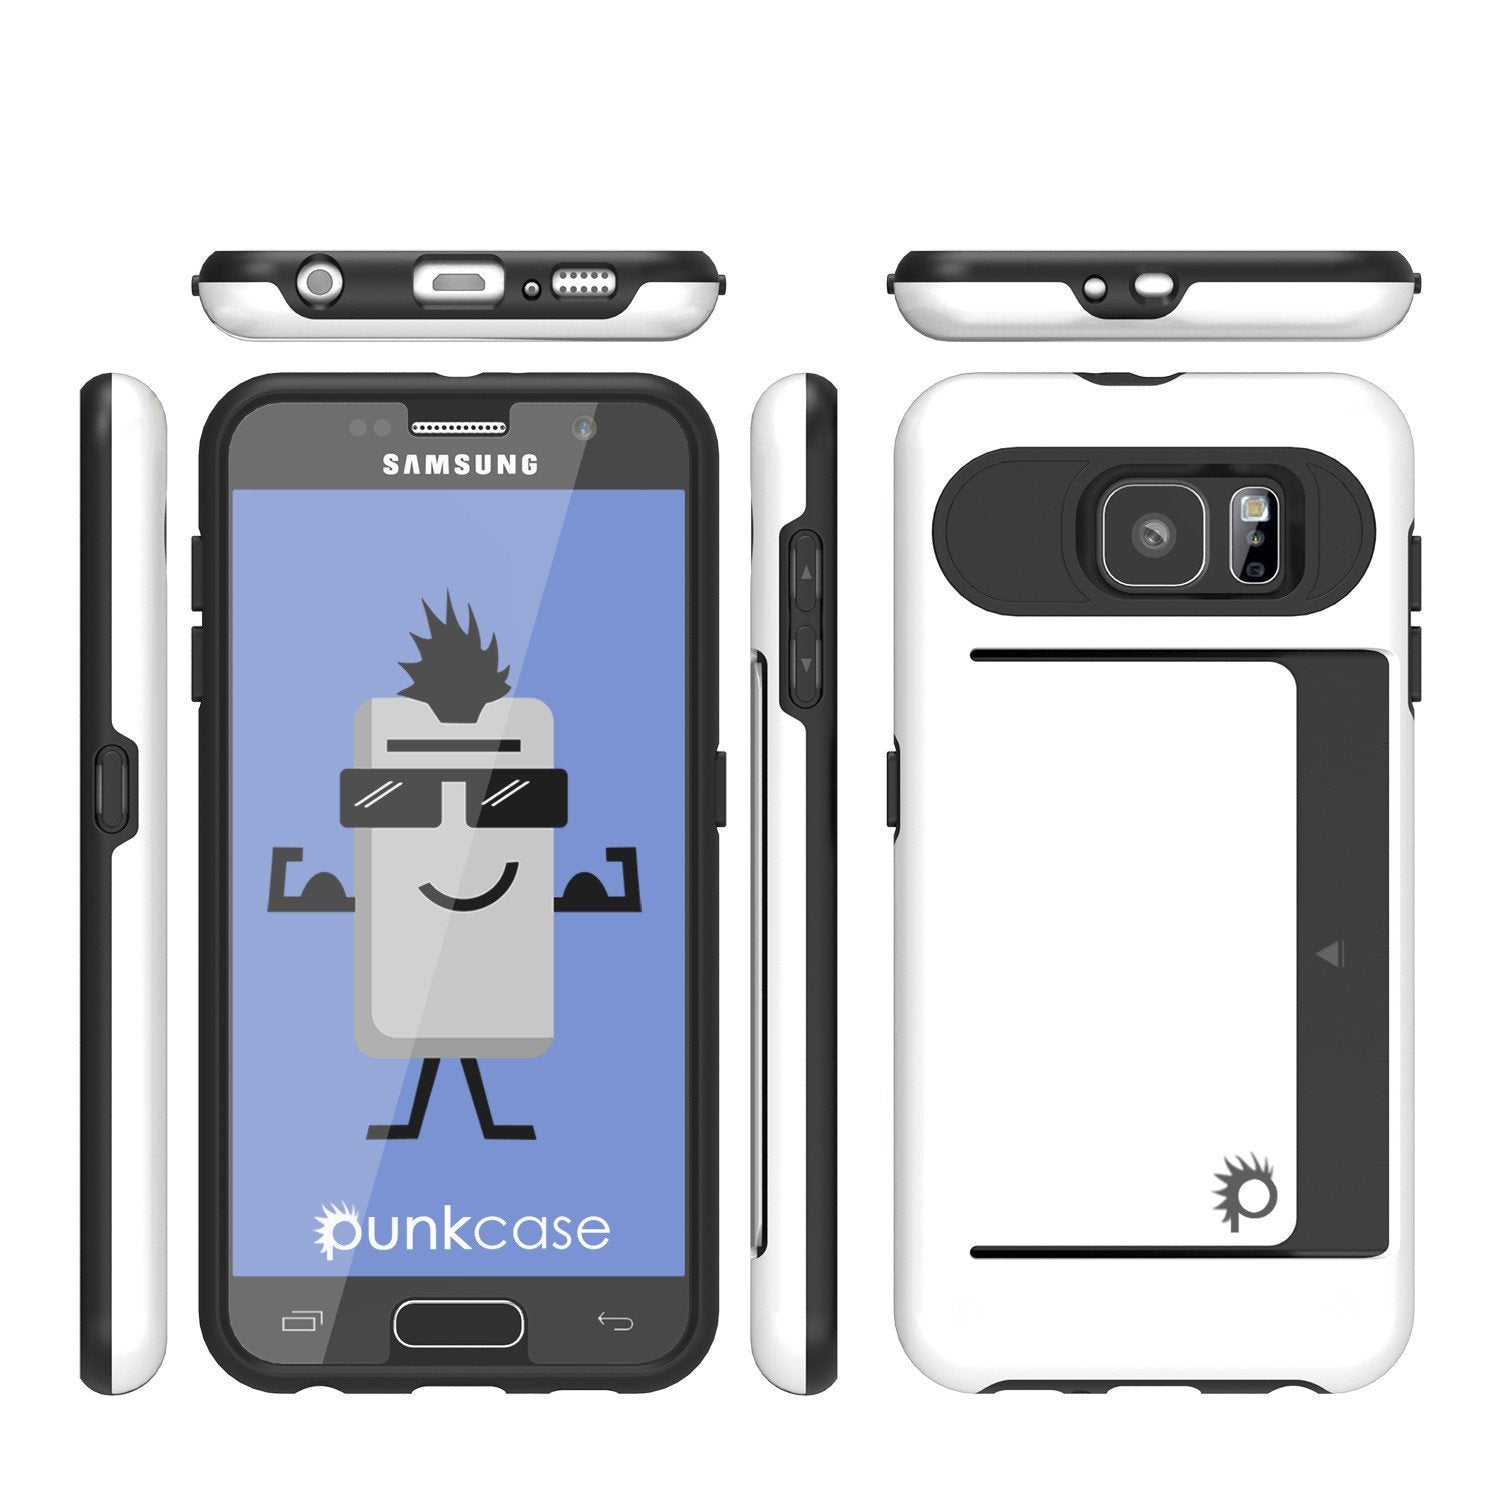 Galaxy S6 EDGE Plus Case PunkCase CLUTCH White Series Slim Armor Soft Cover Case w/ Screen Protector - PunkCase NZ